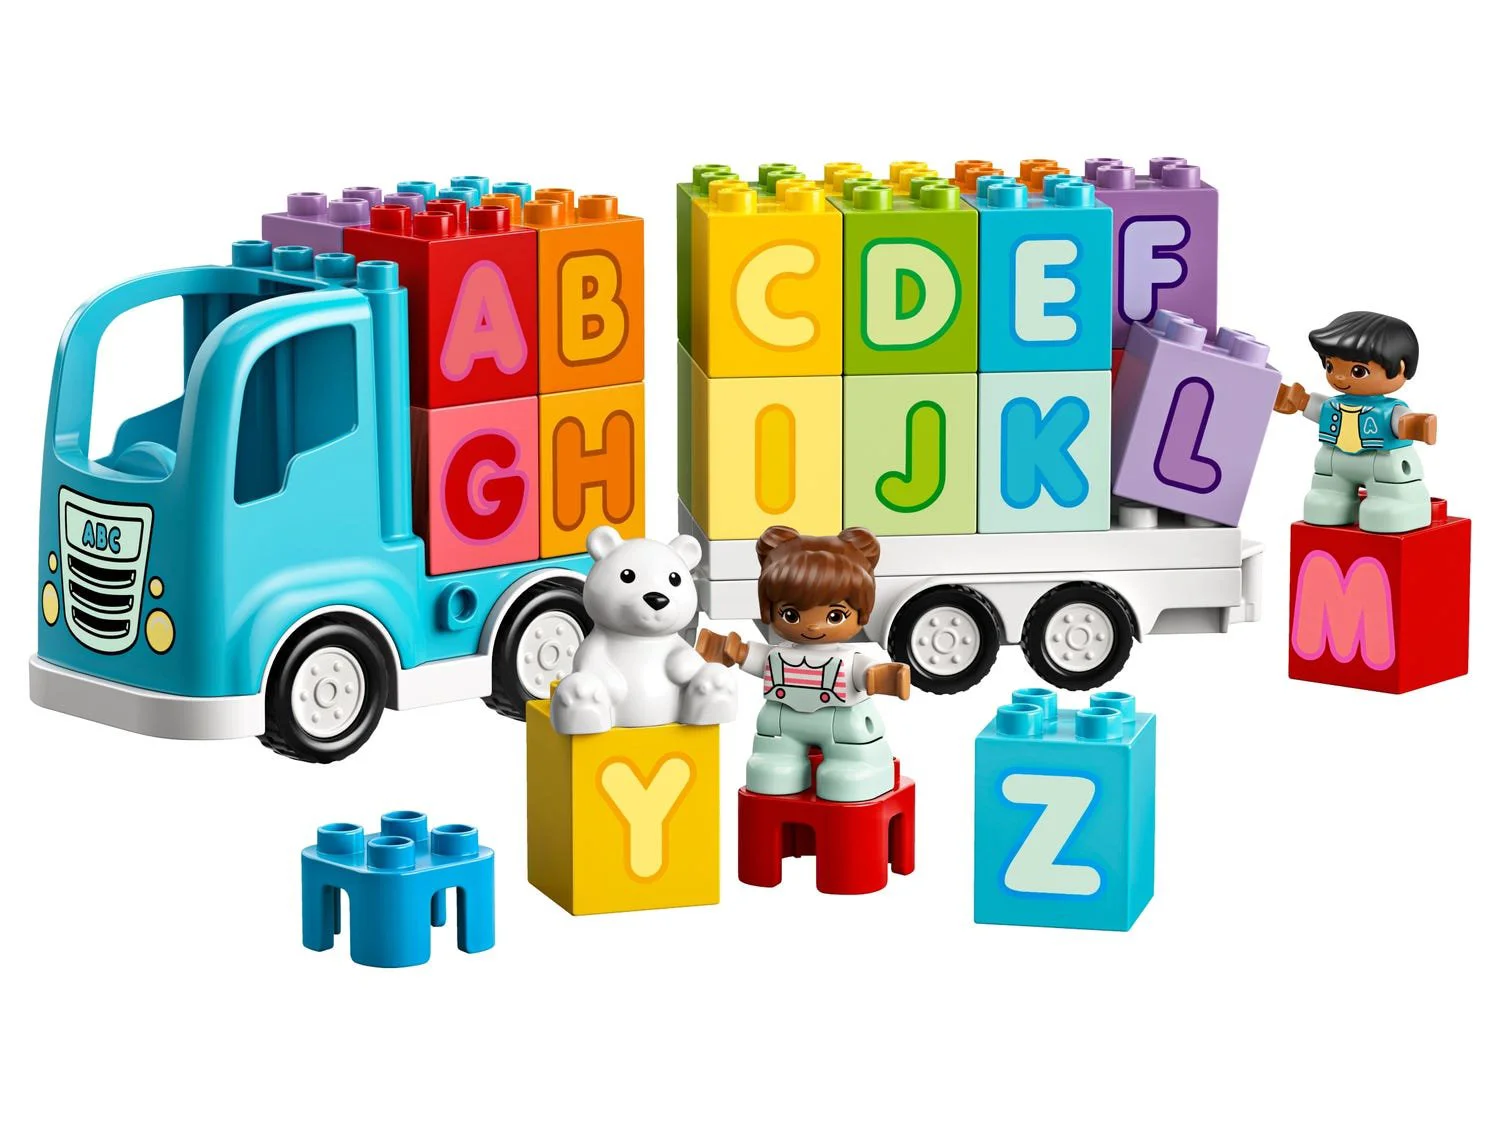 LEGO Duplo - Alphabet Truck